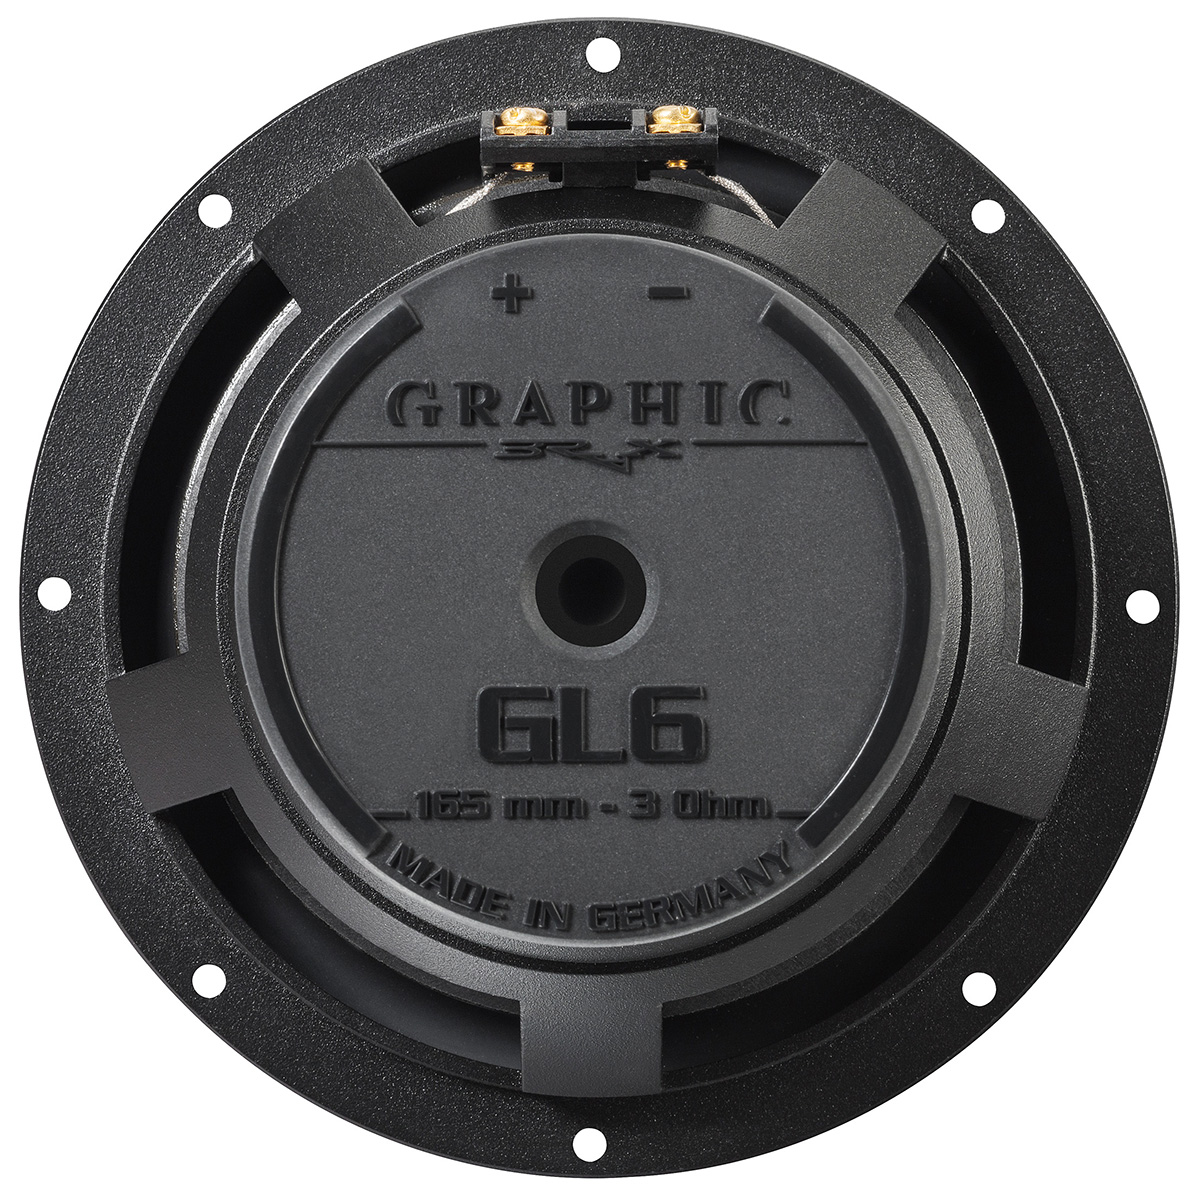 GRAPHIC GL6 Front Magnet.JPG